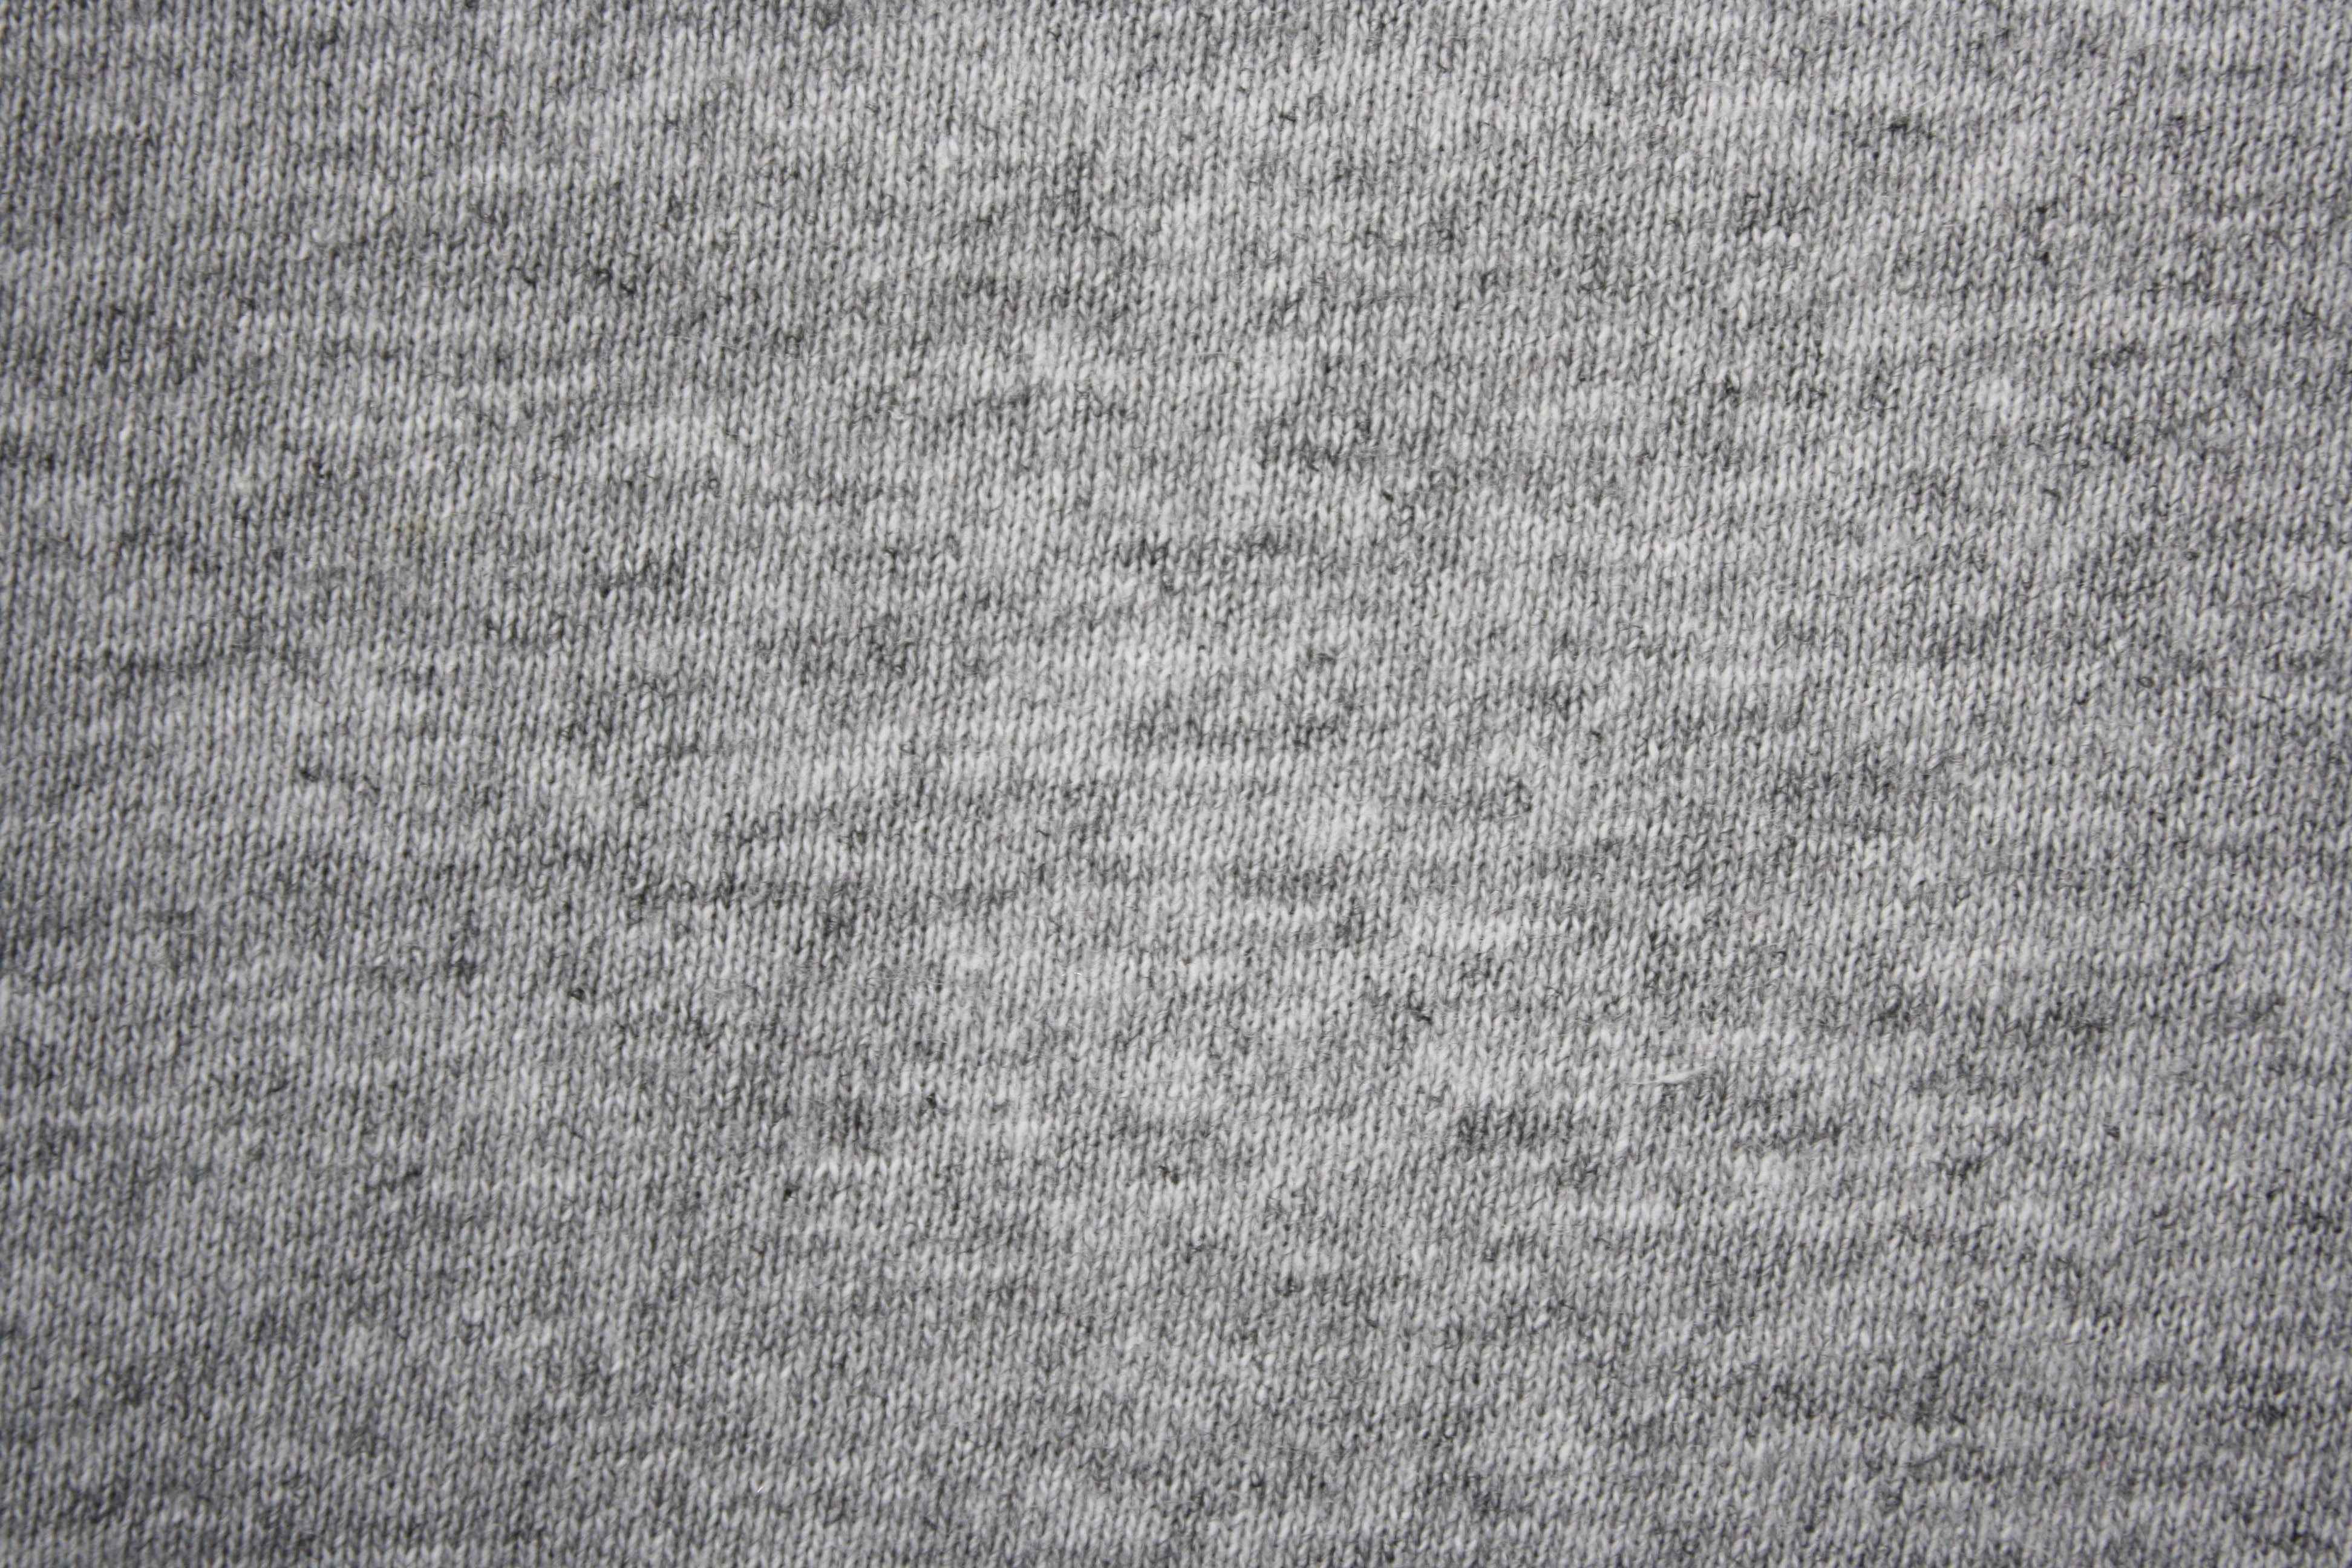 Gray Heather Knit T Shirt Fabric Texture High Resolution Photo